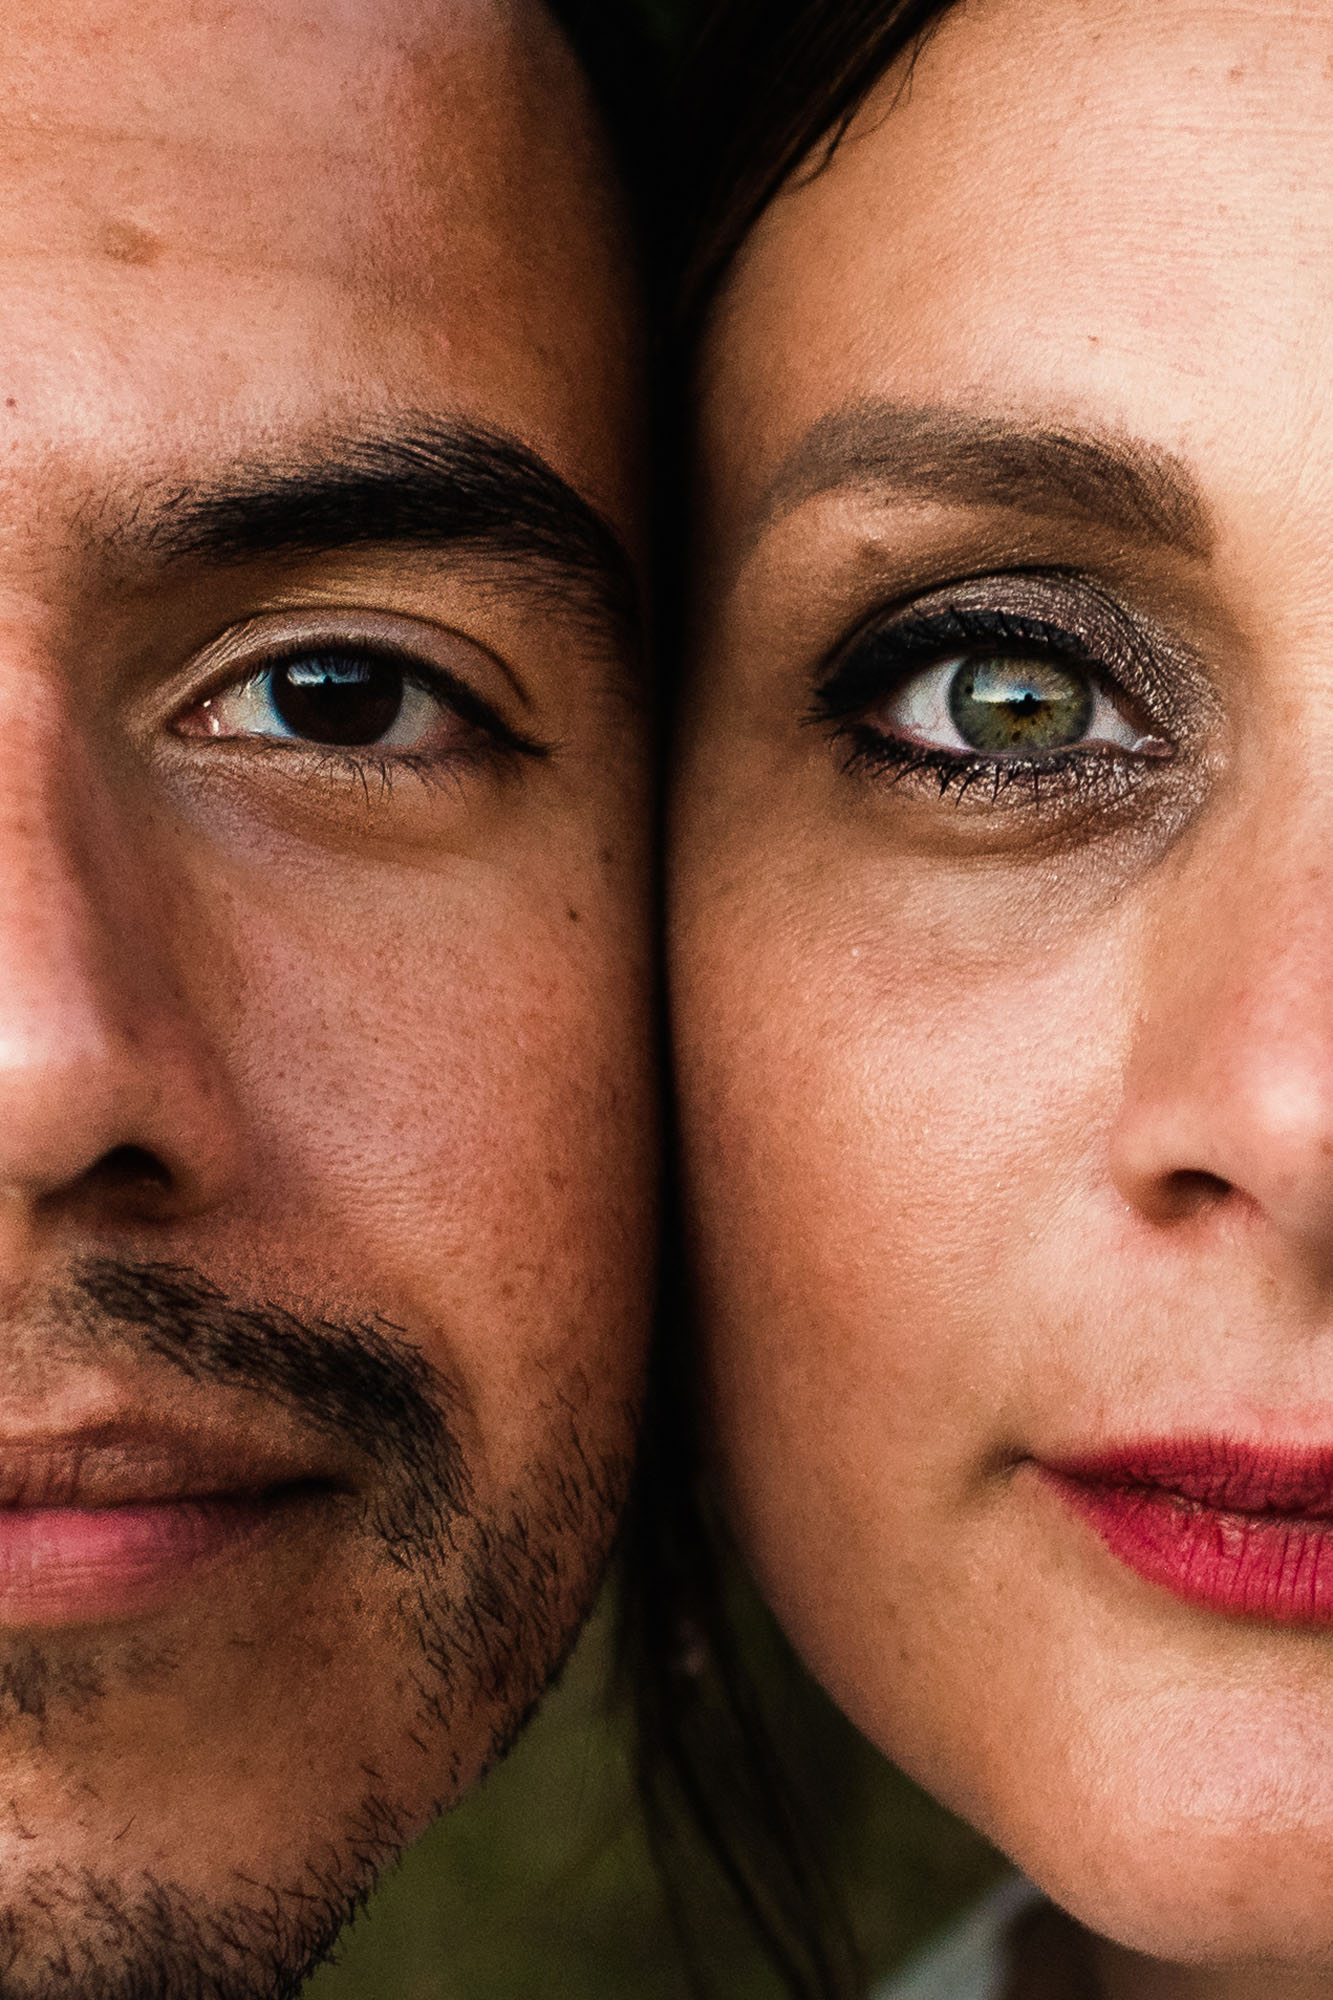 San Antonio Maternity Photographer, Detail shot of couple's faces